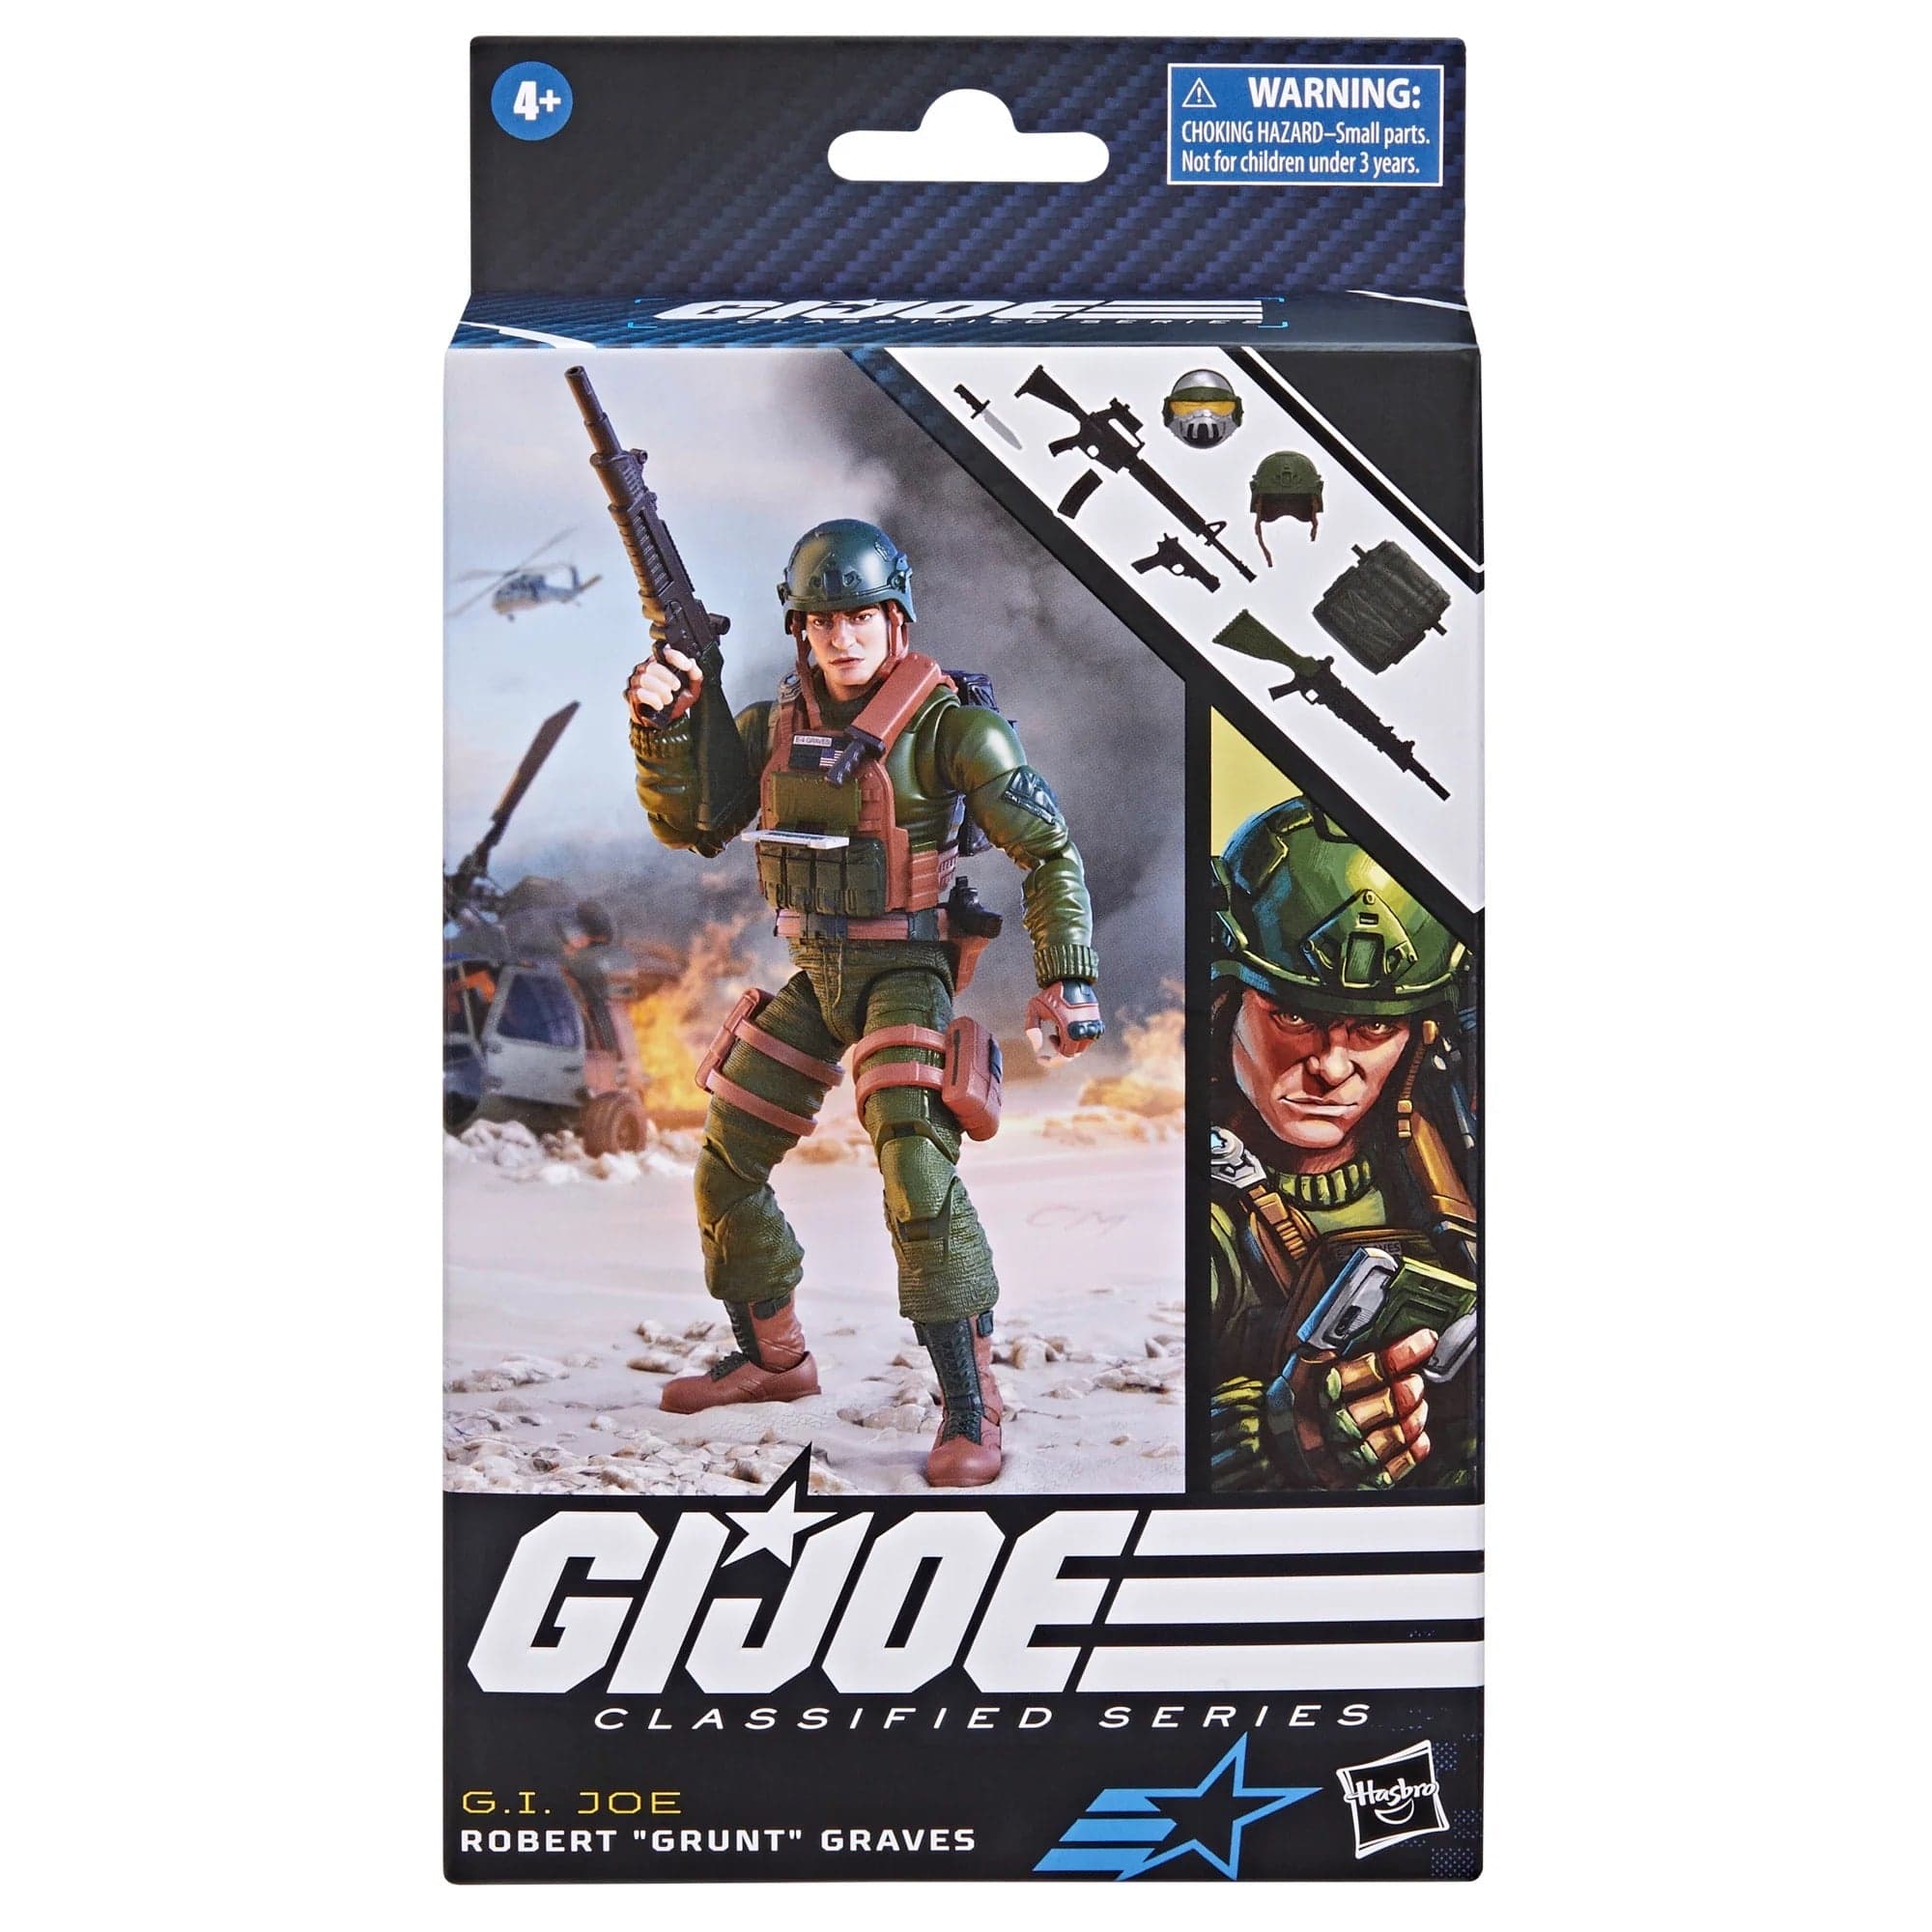 Hasbro G.I. Joe Classified Series Robert "Grunt" Graves Action Figure